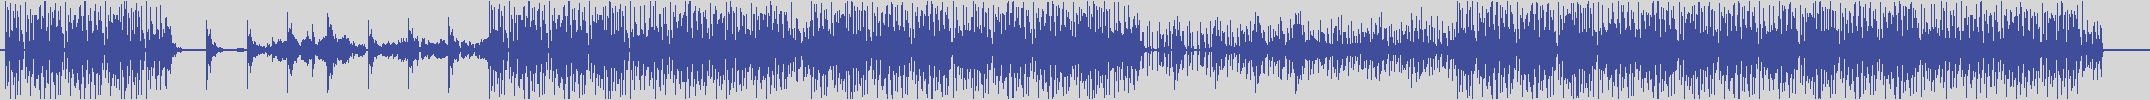 nf_boyz_records [NFY077] Dee Tech - The Joy [Deep Mix] audio wave form